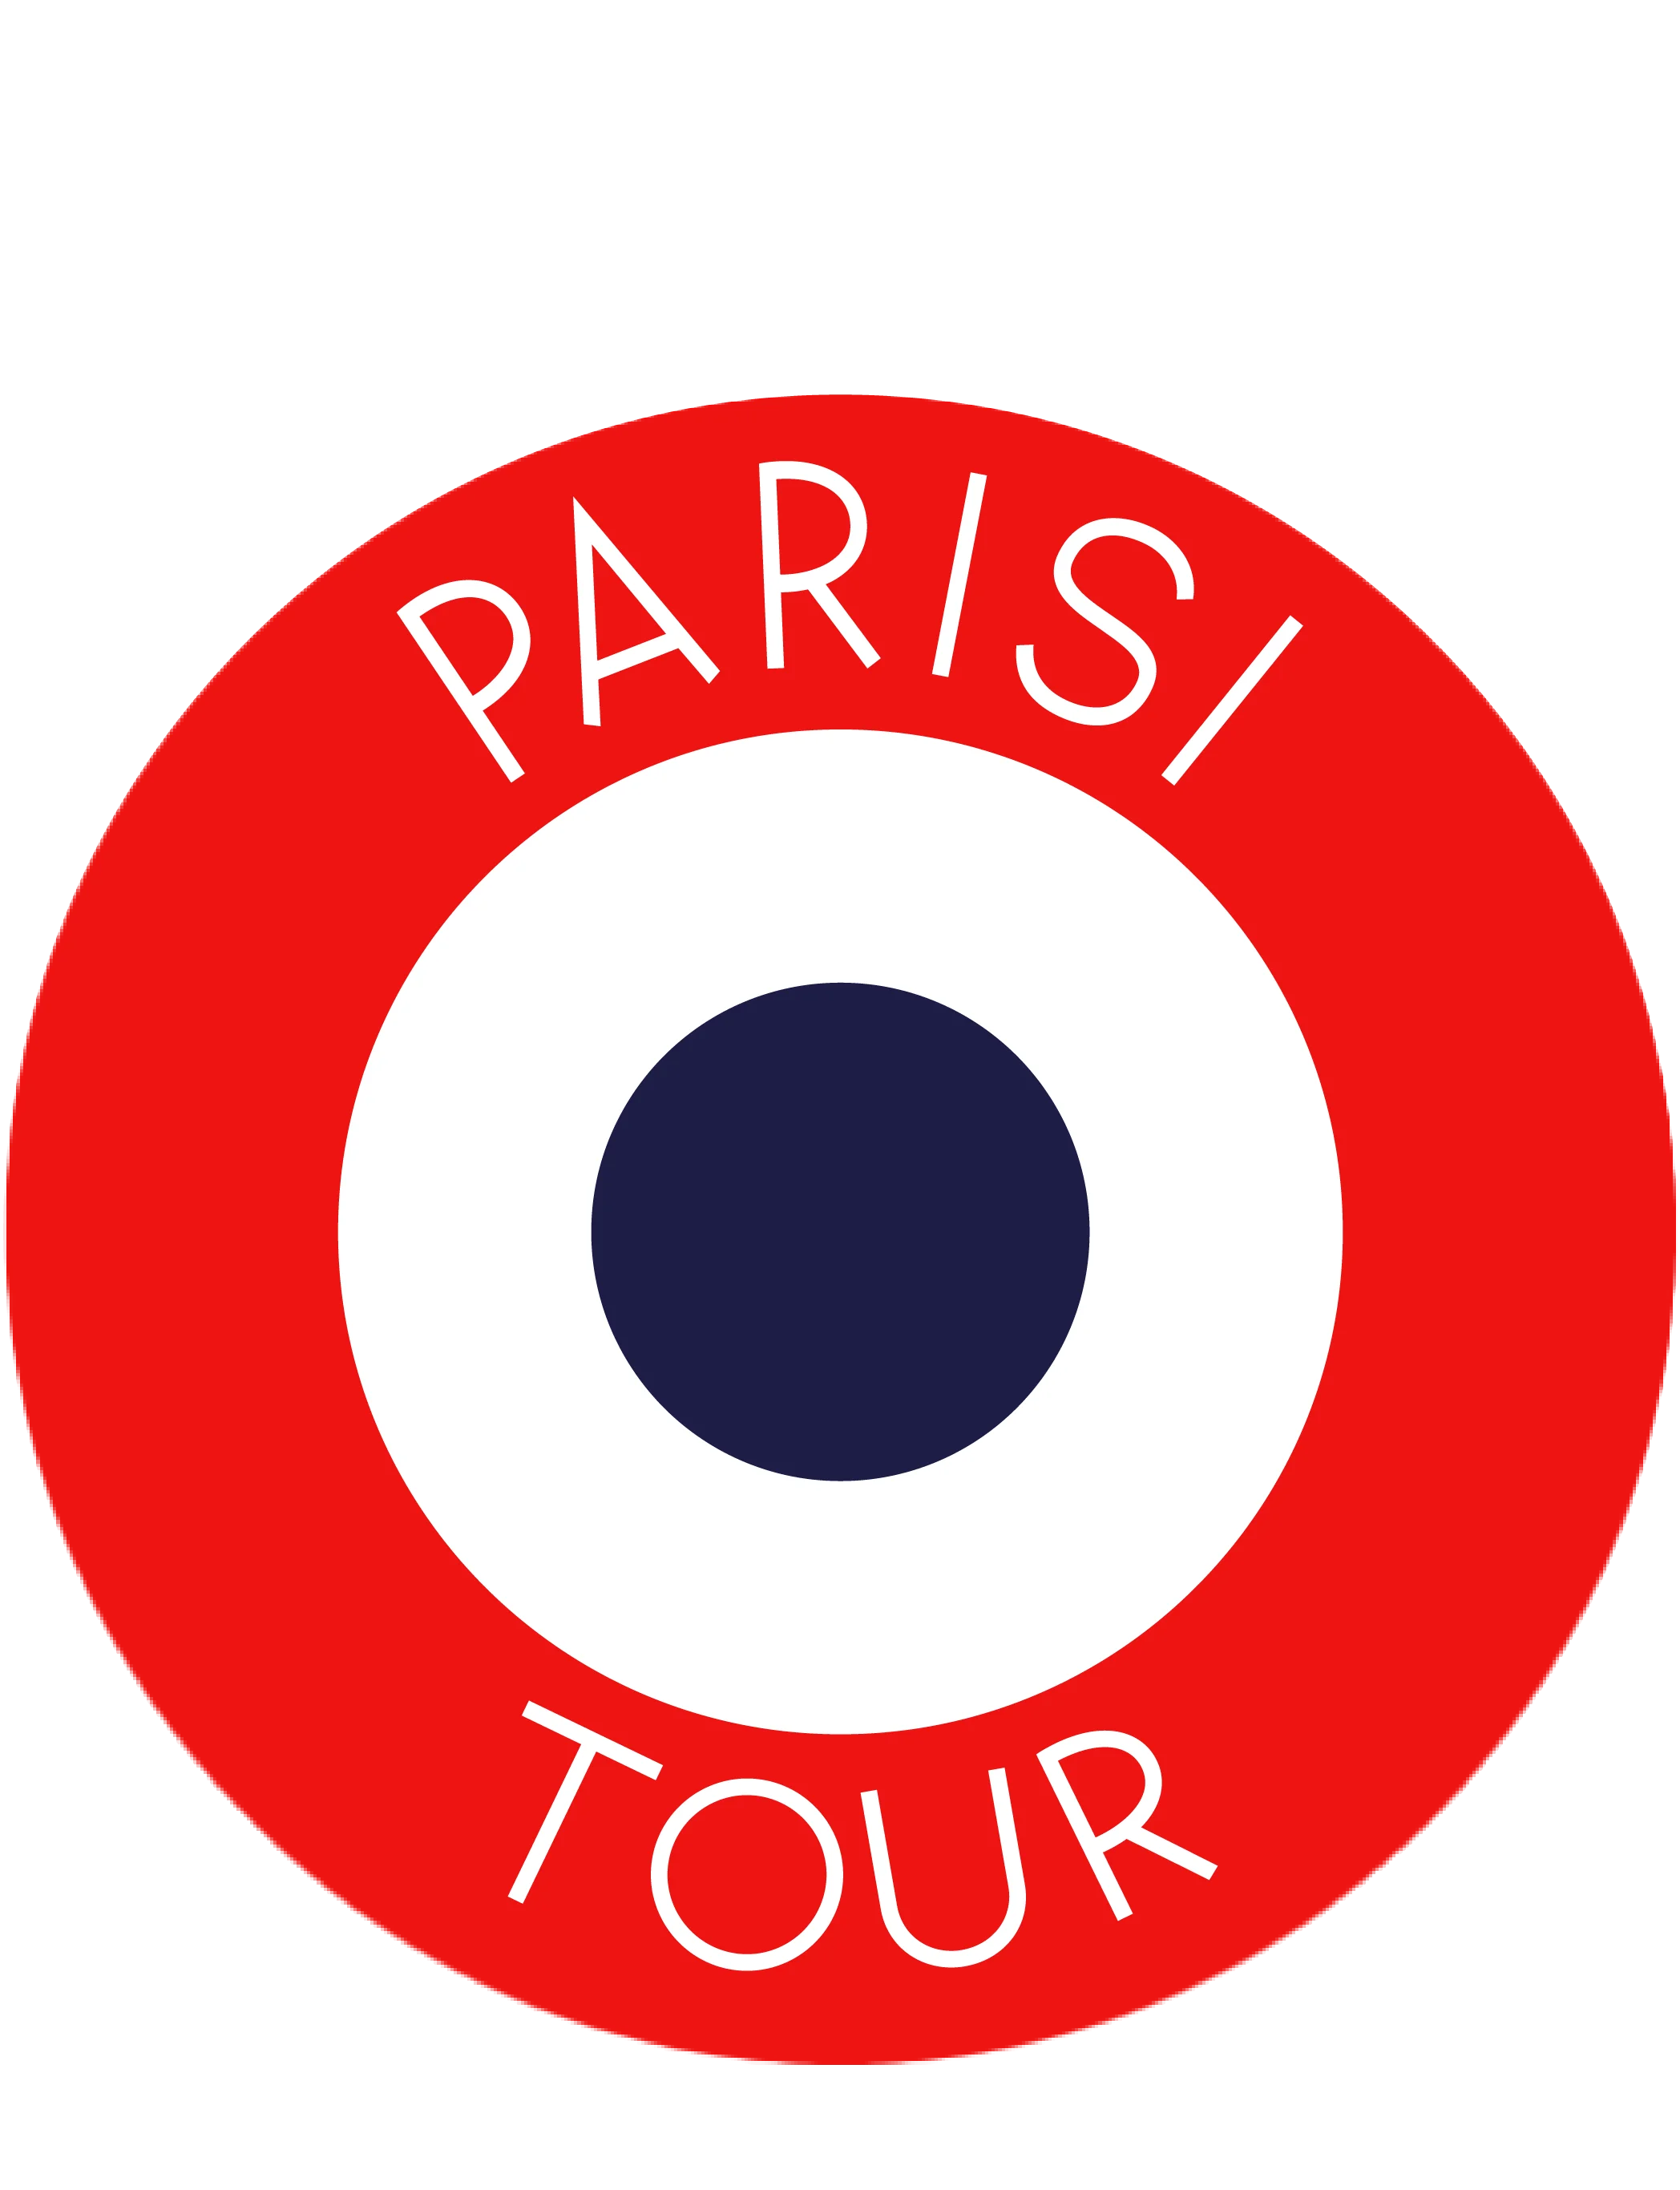 Parisi Tour Logo